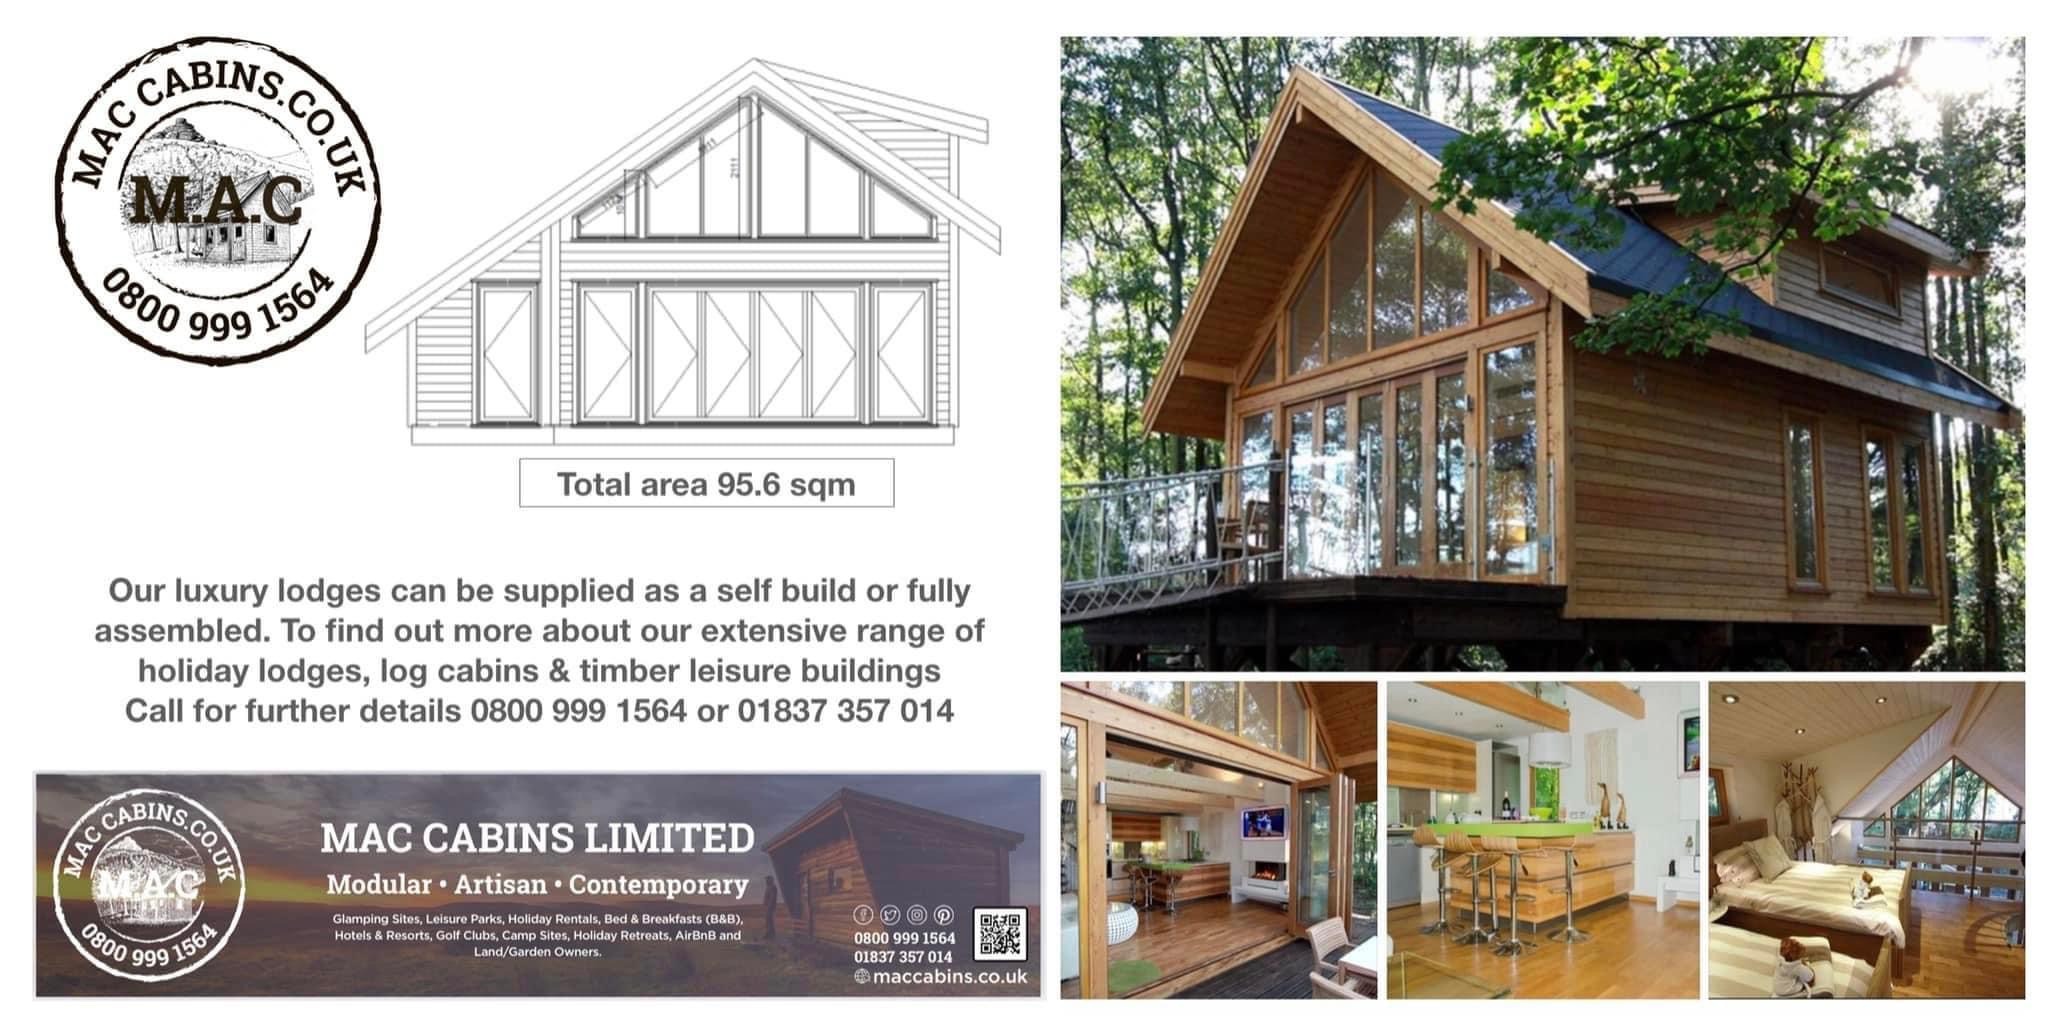 MAC Cabins Log Cabins & Timber Lodges